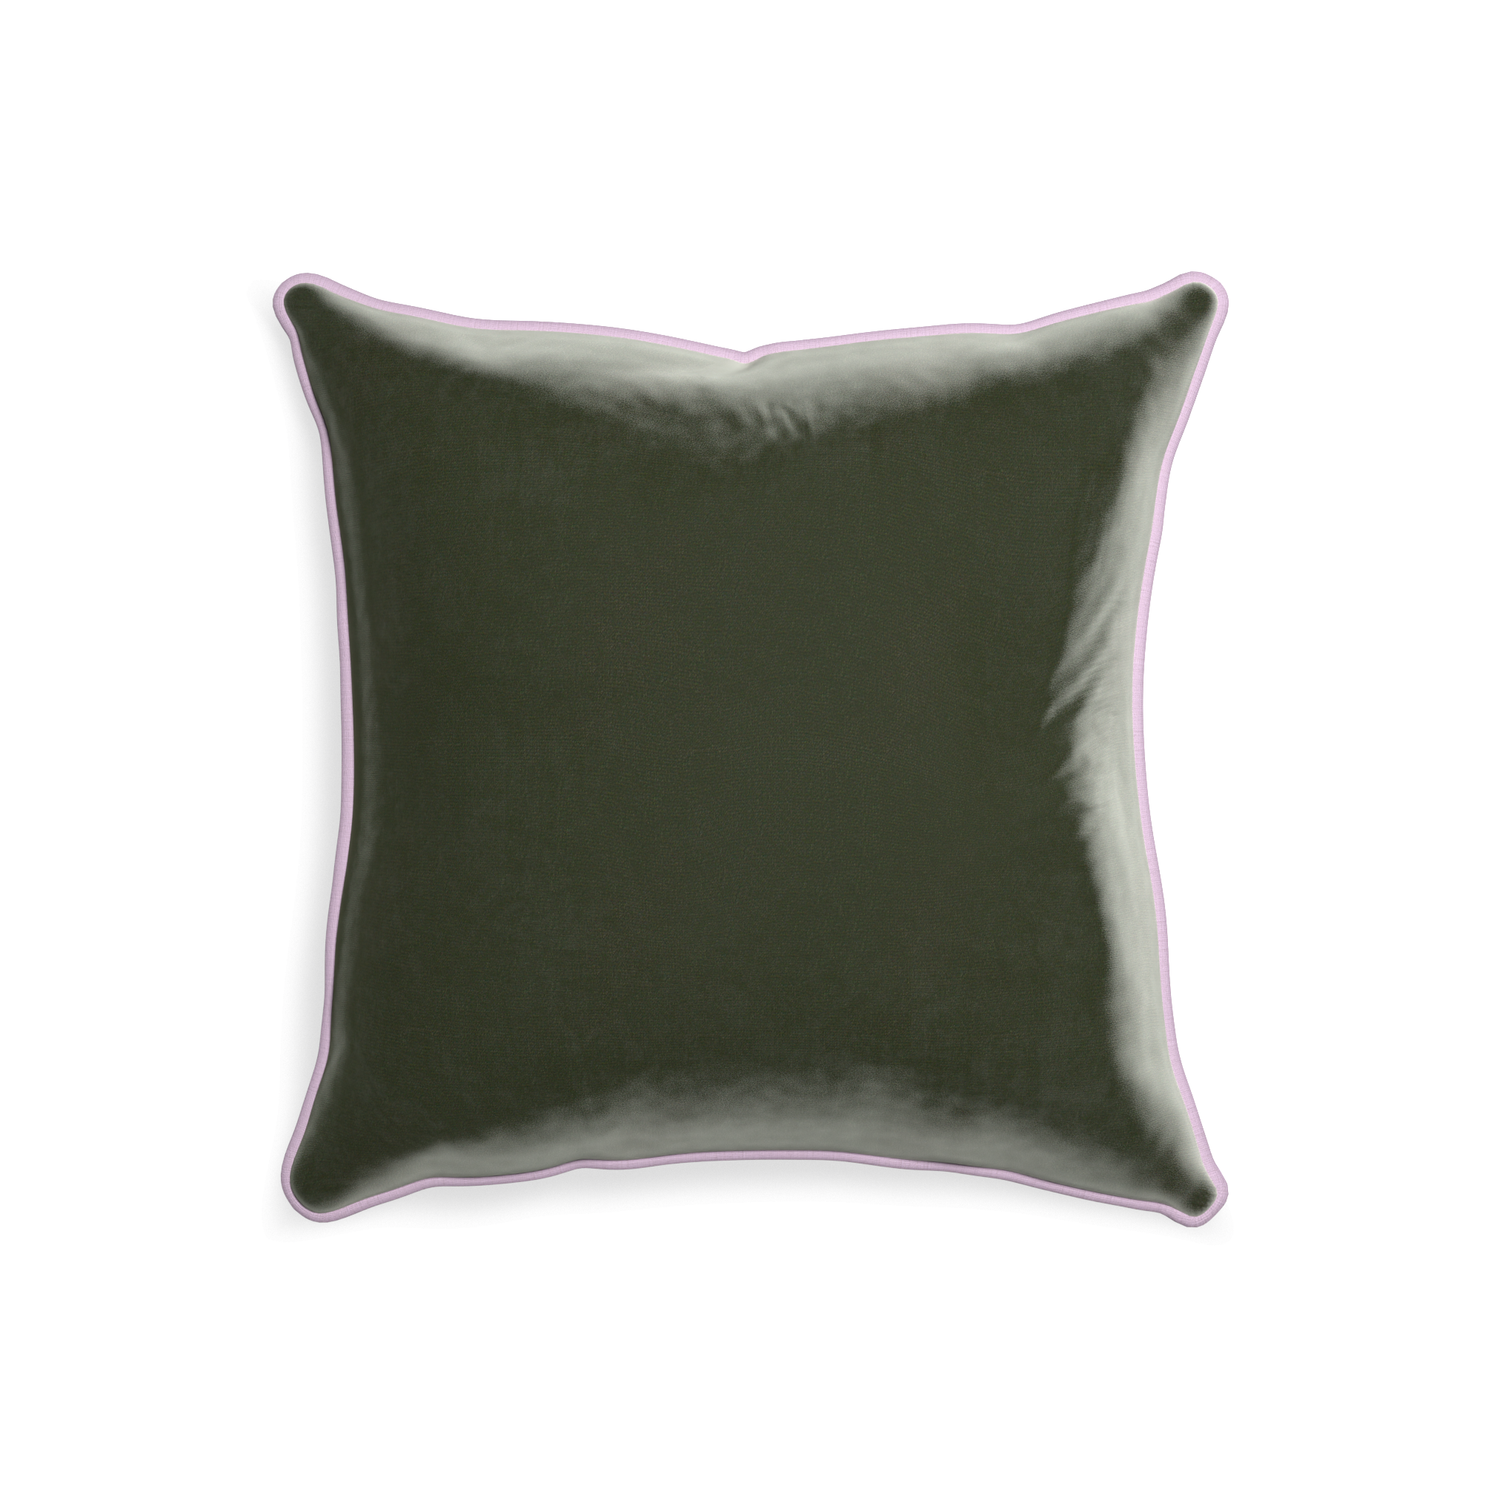 20-square fern velvet custom pillow with l piping on white background